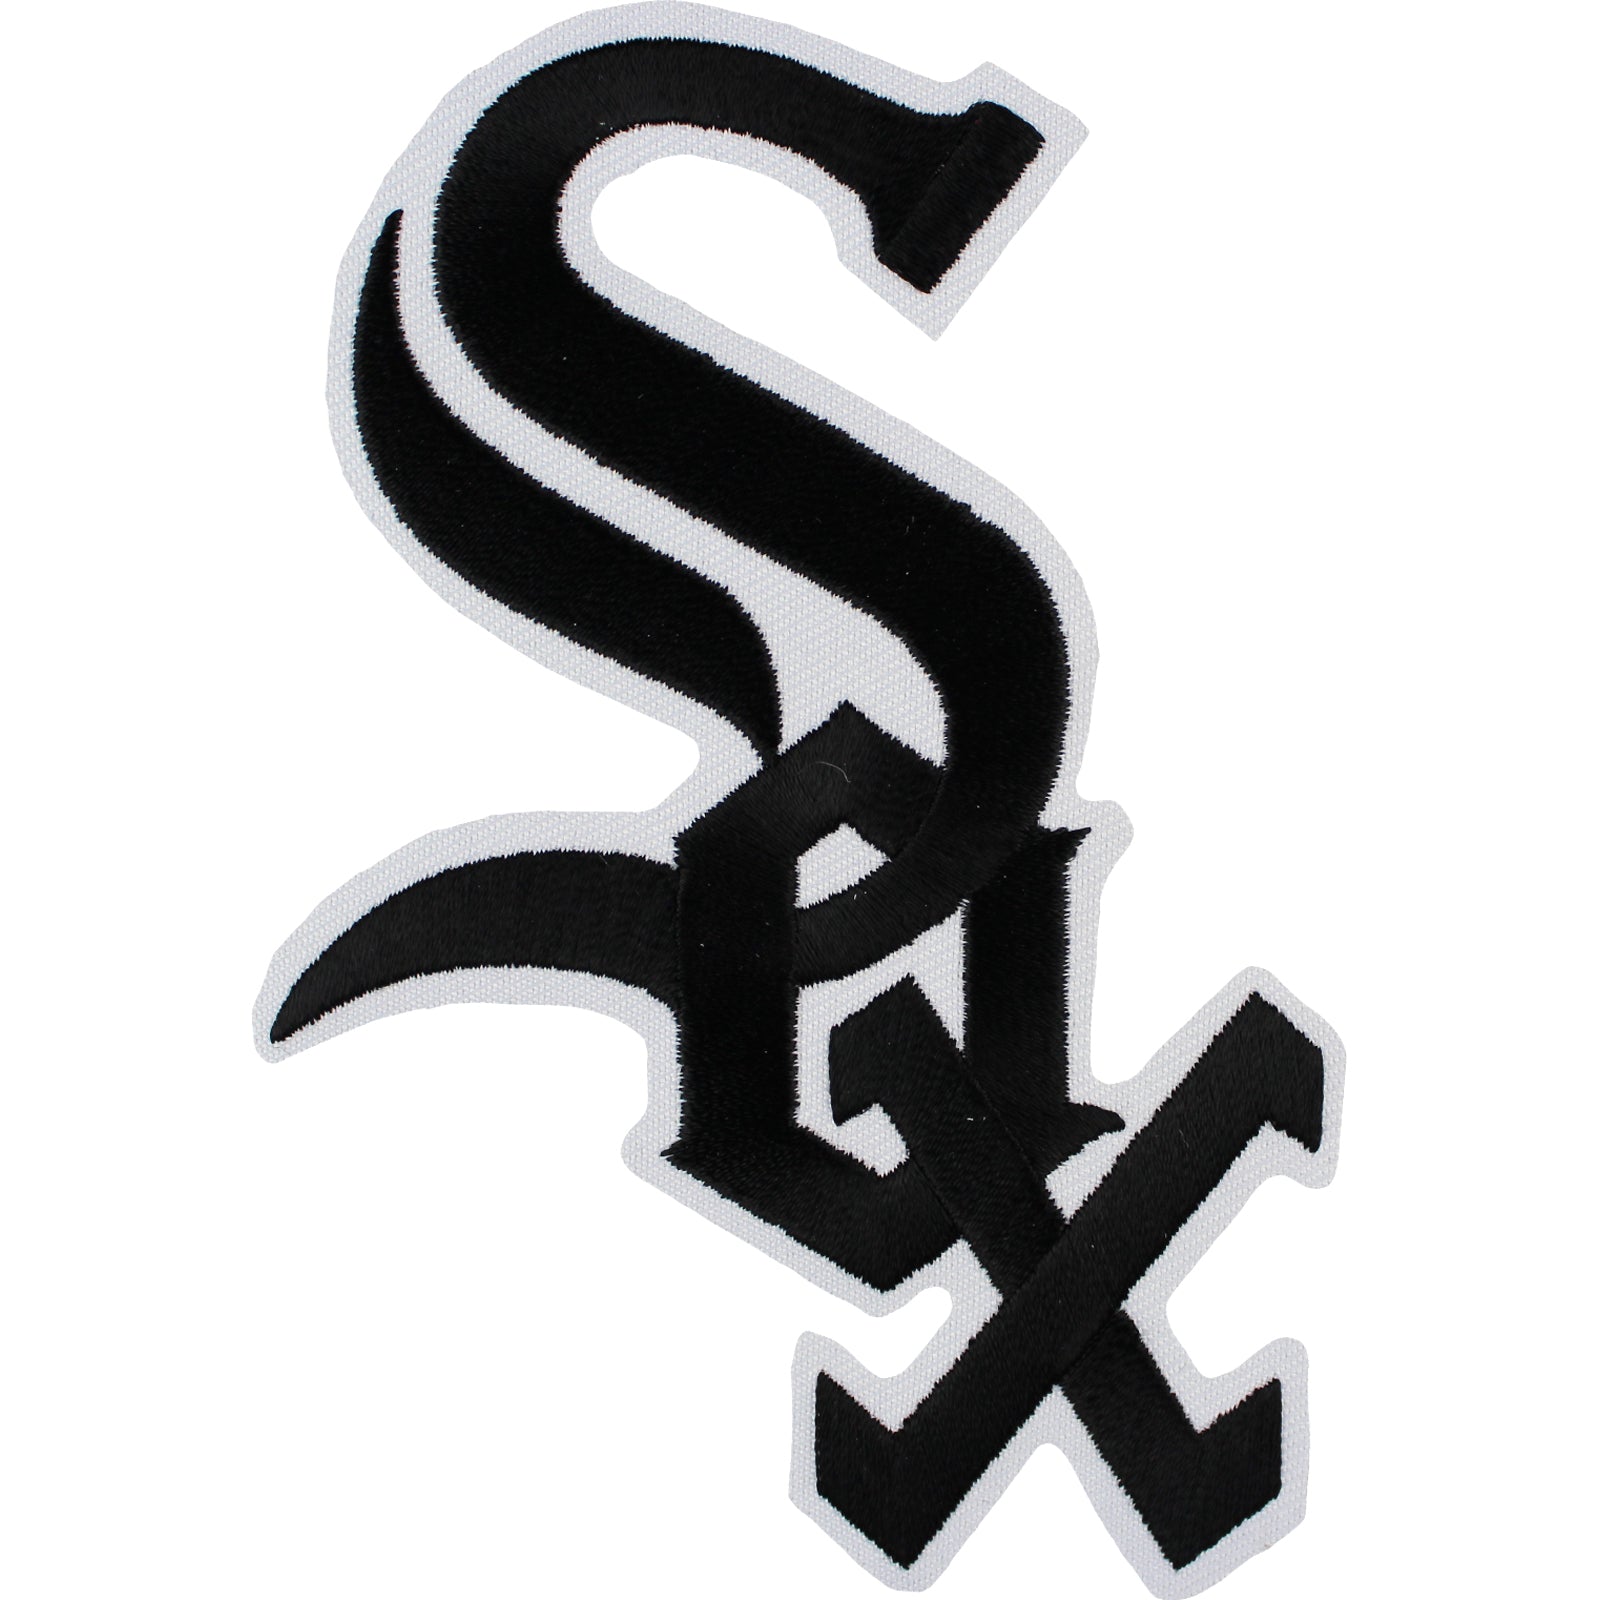 Chicago White Sox Stitches Youth Team Logo Jersey - Black